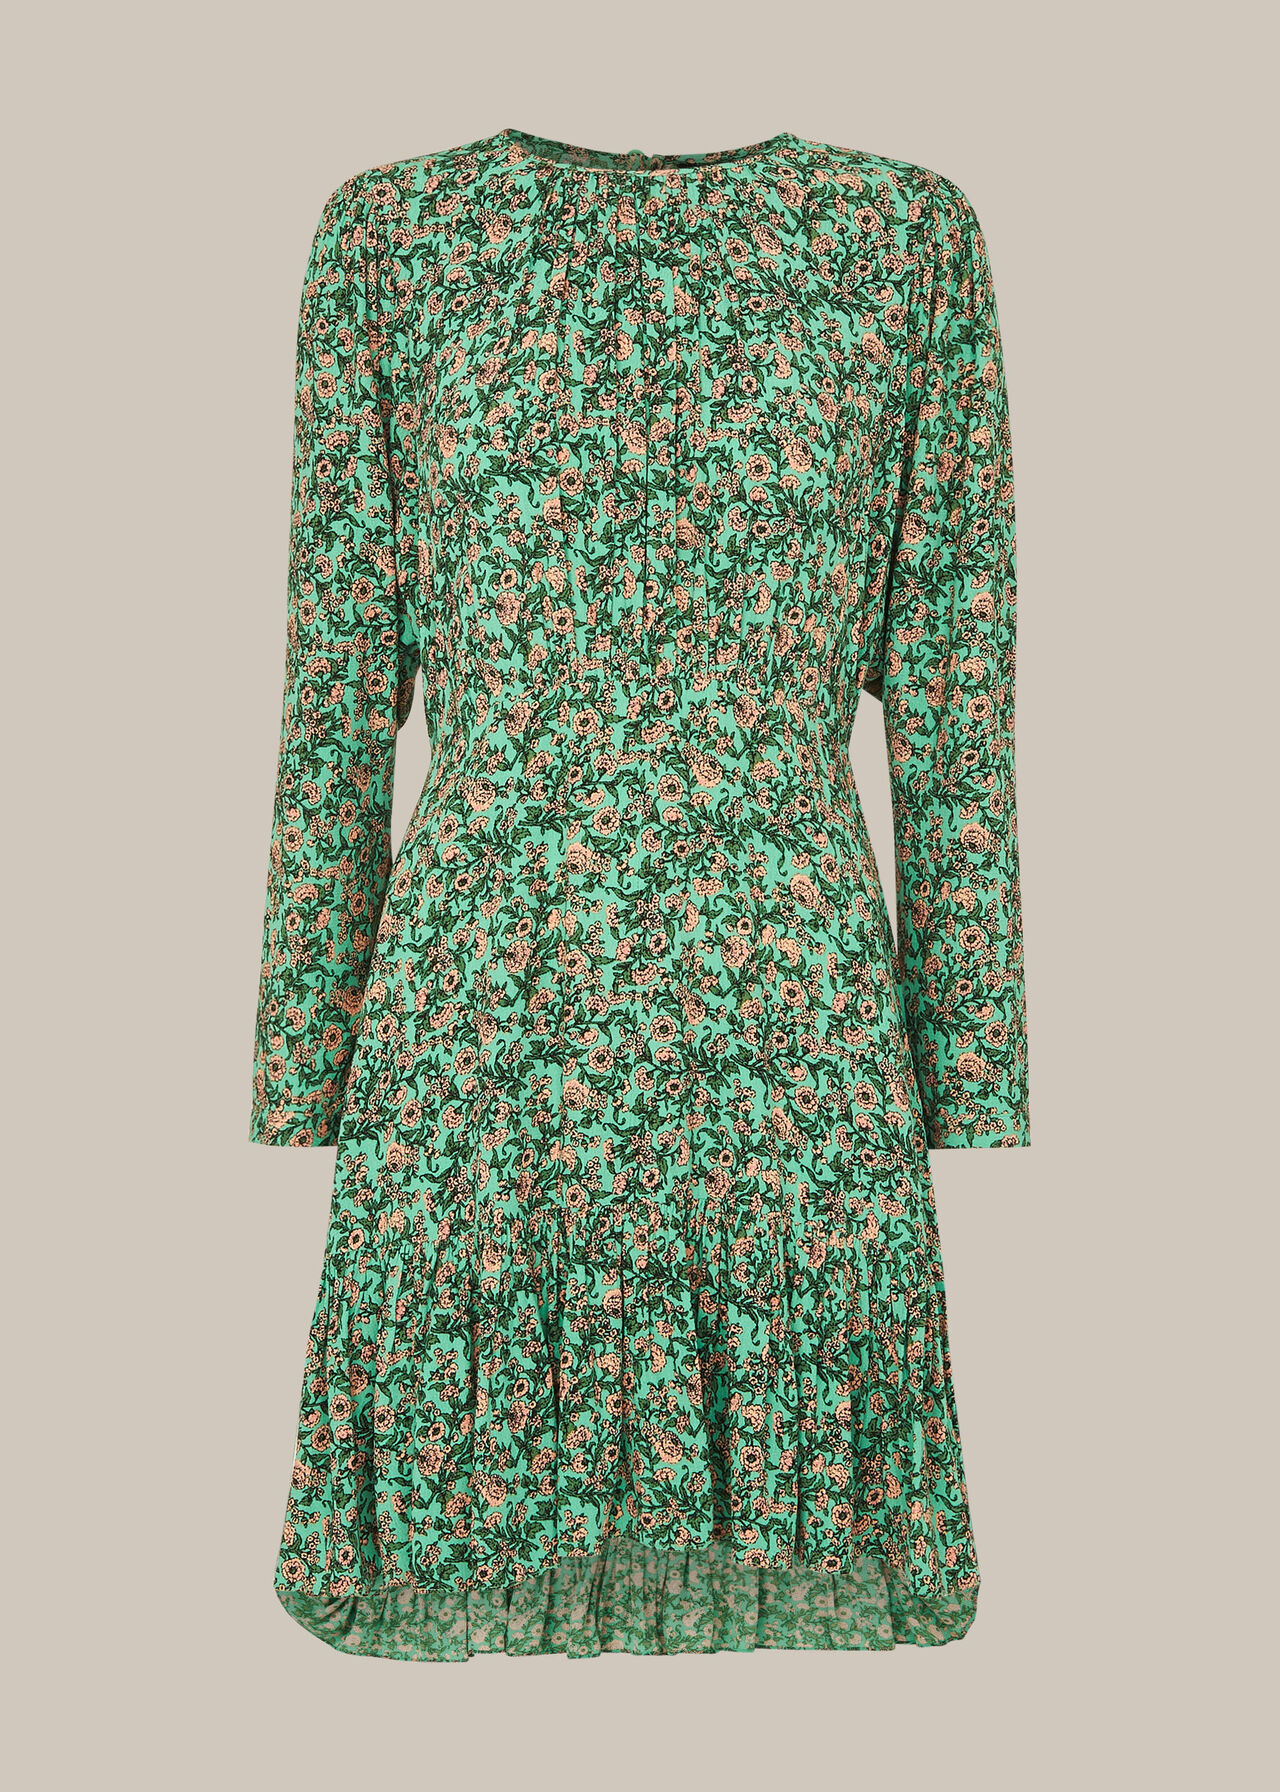 Heath Floral Print Dress